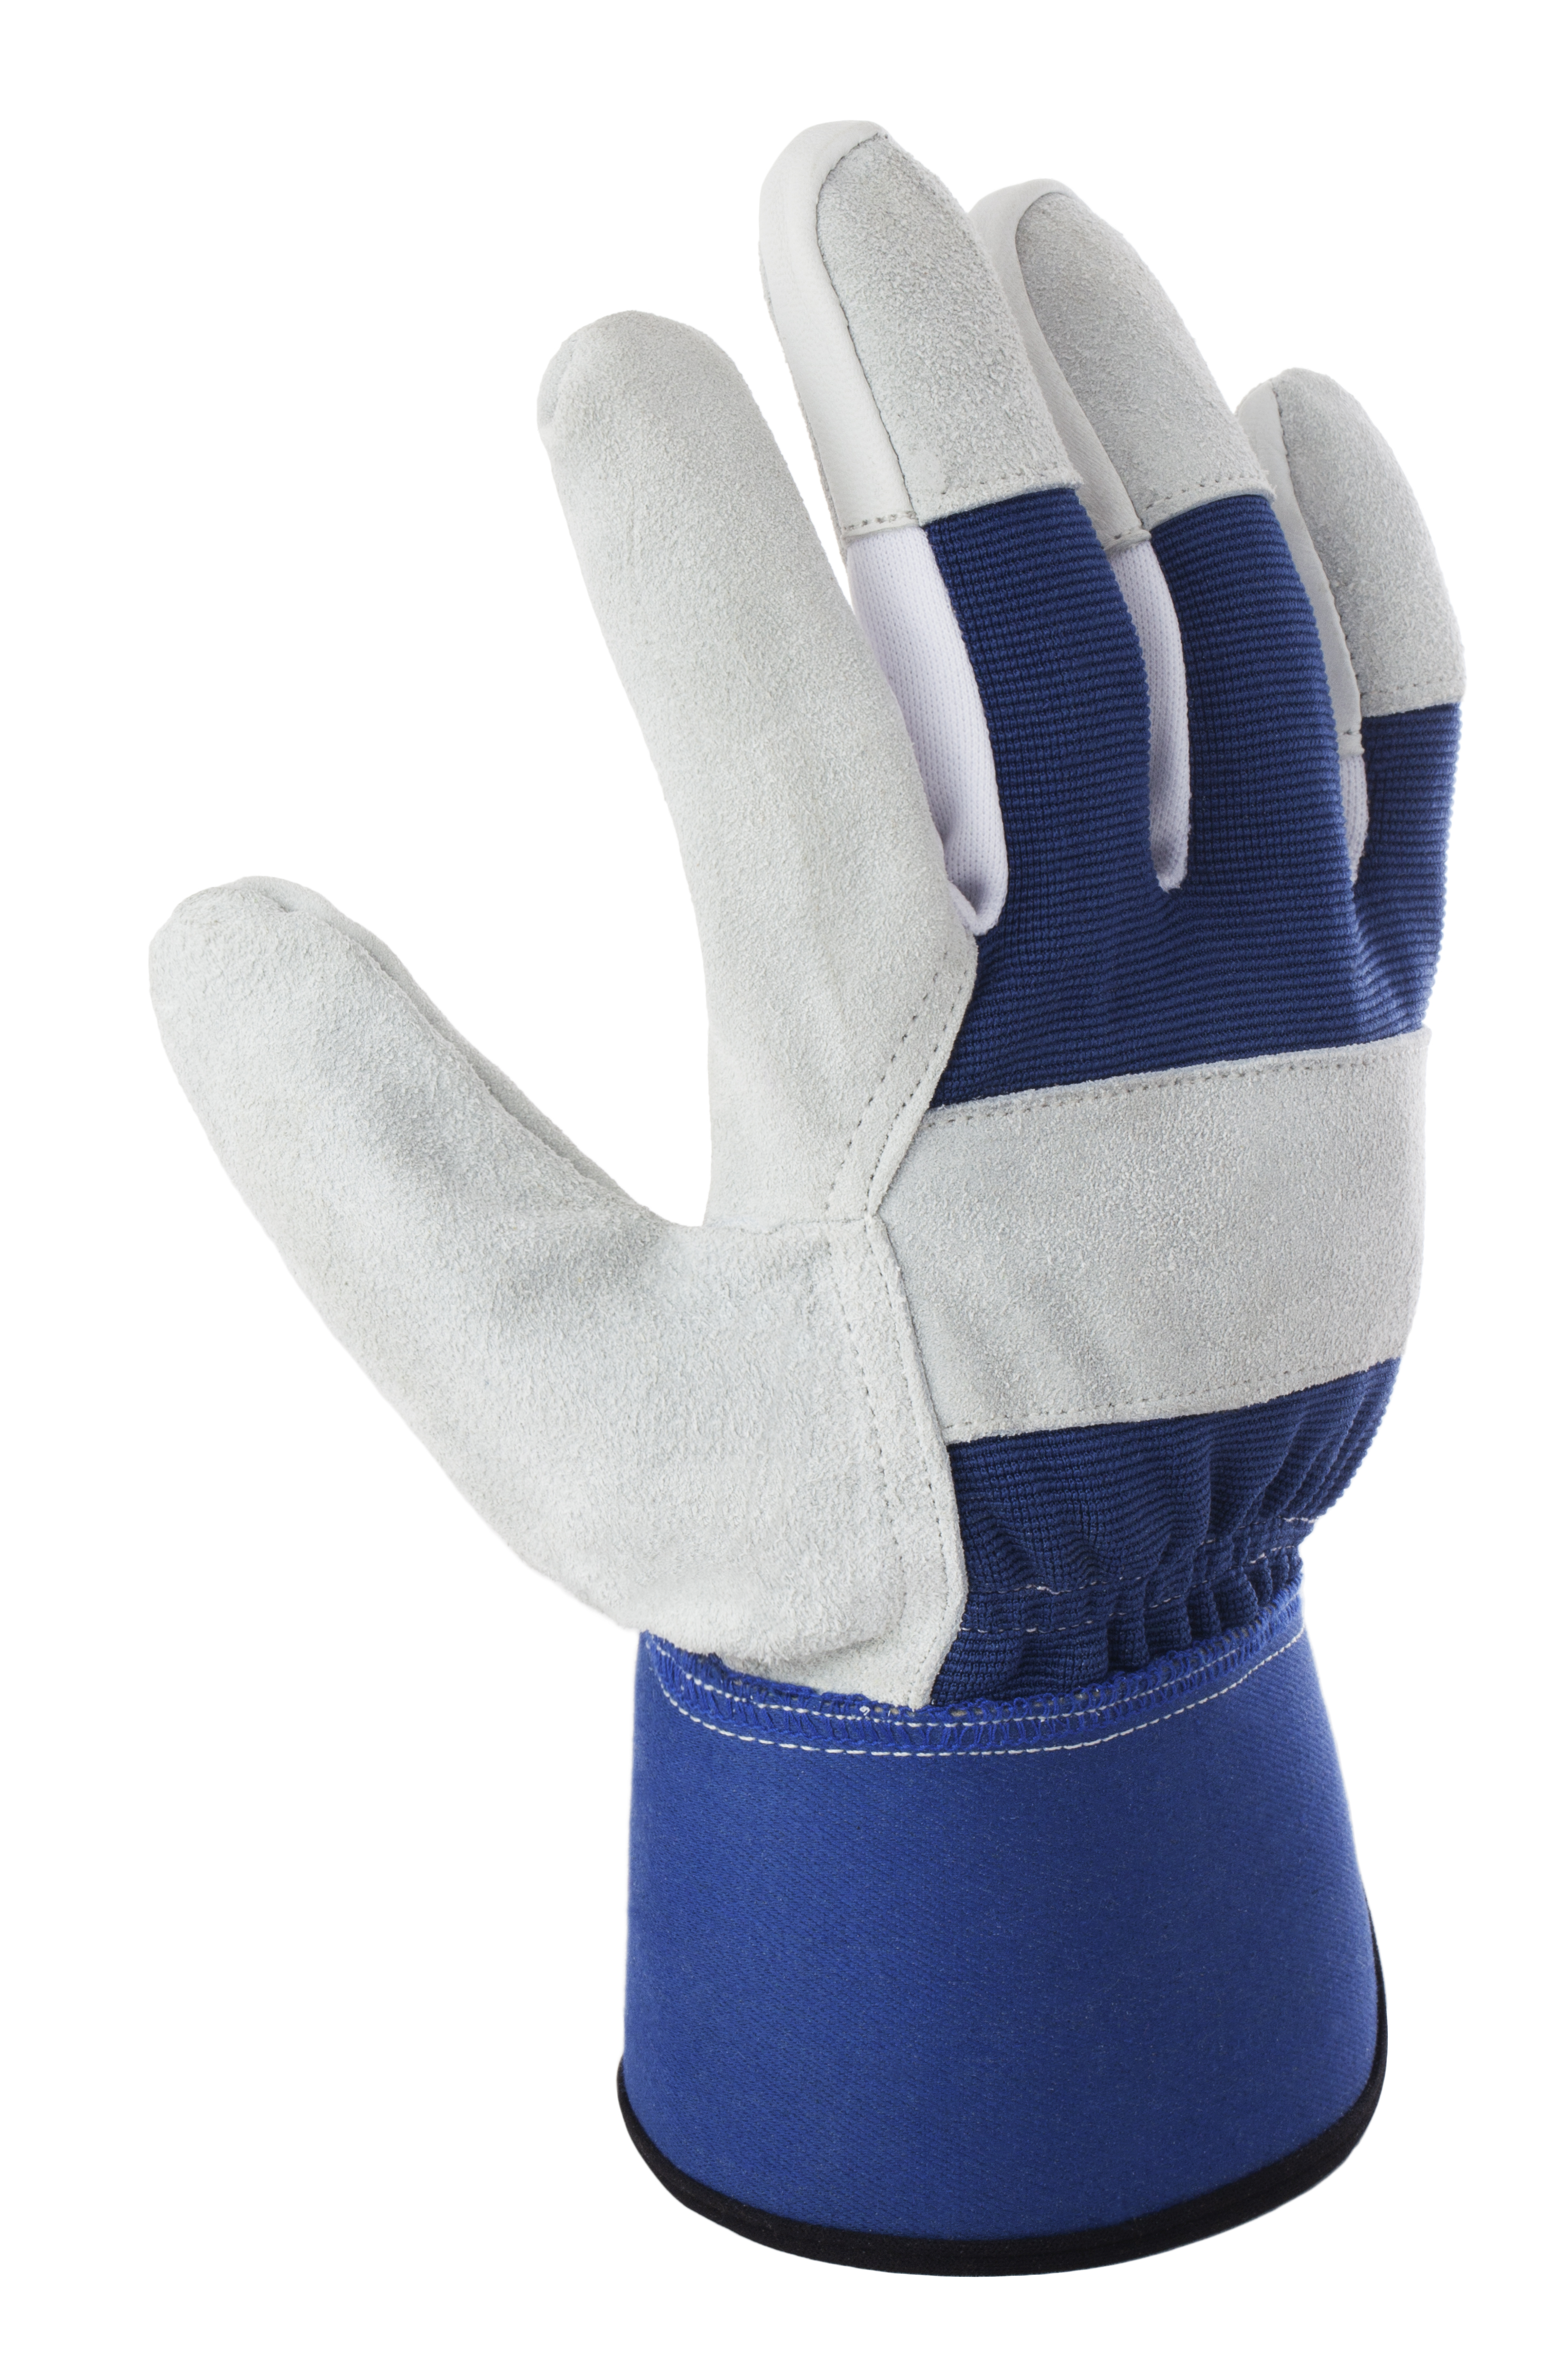 #CPC-350 TurtleSkin® Chem CP 350 Chemical Handling Gloves